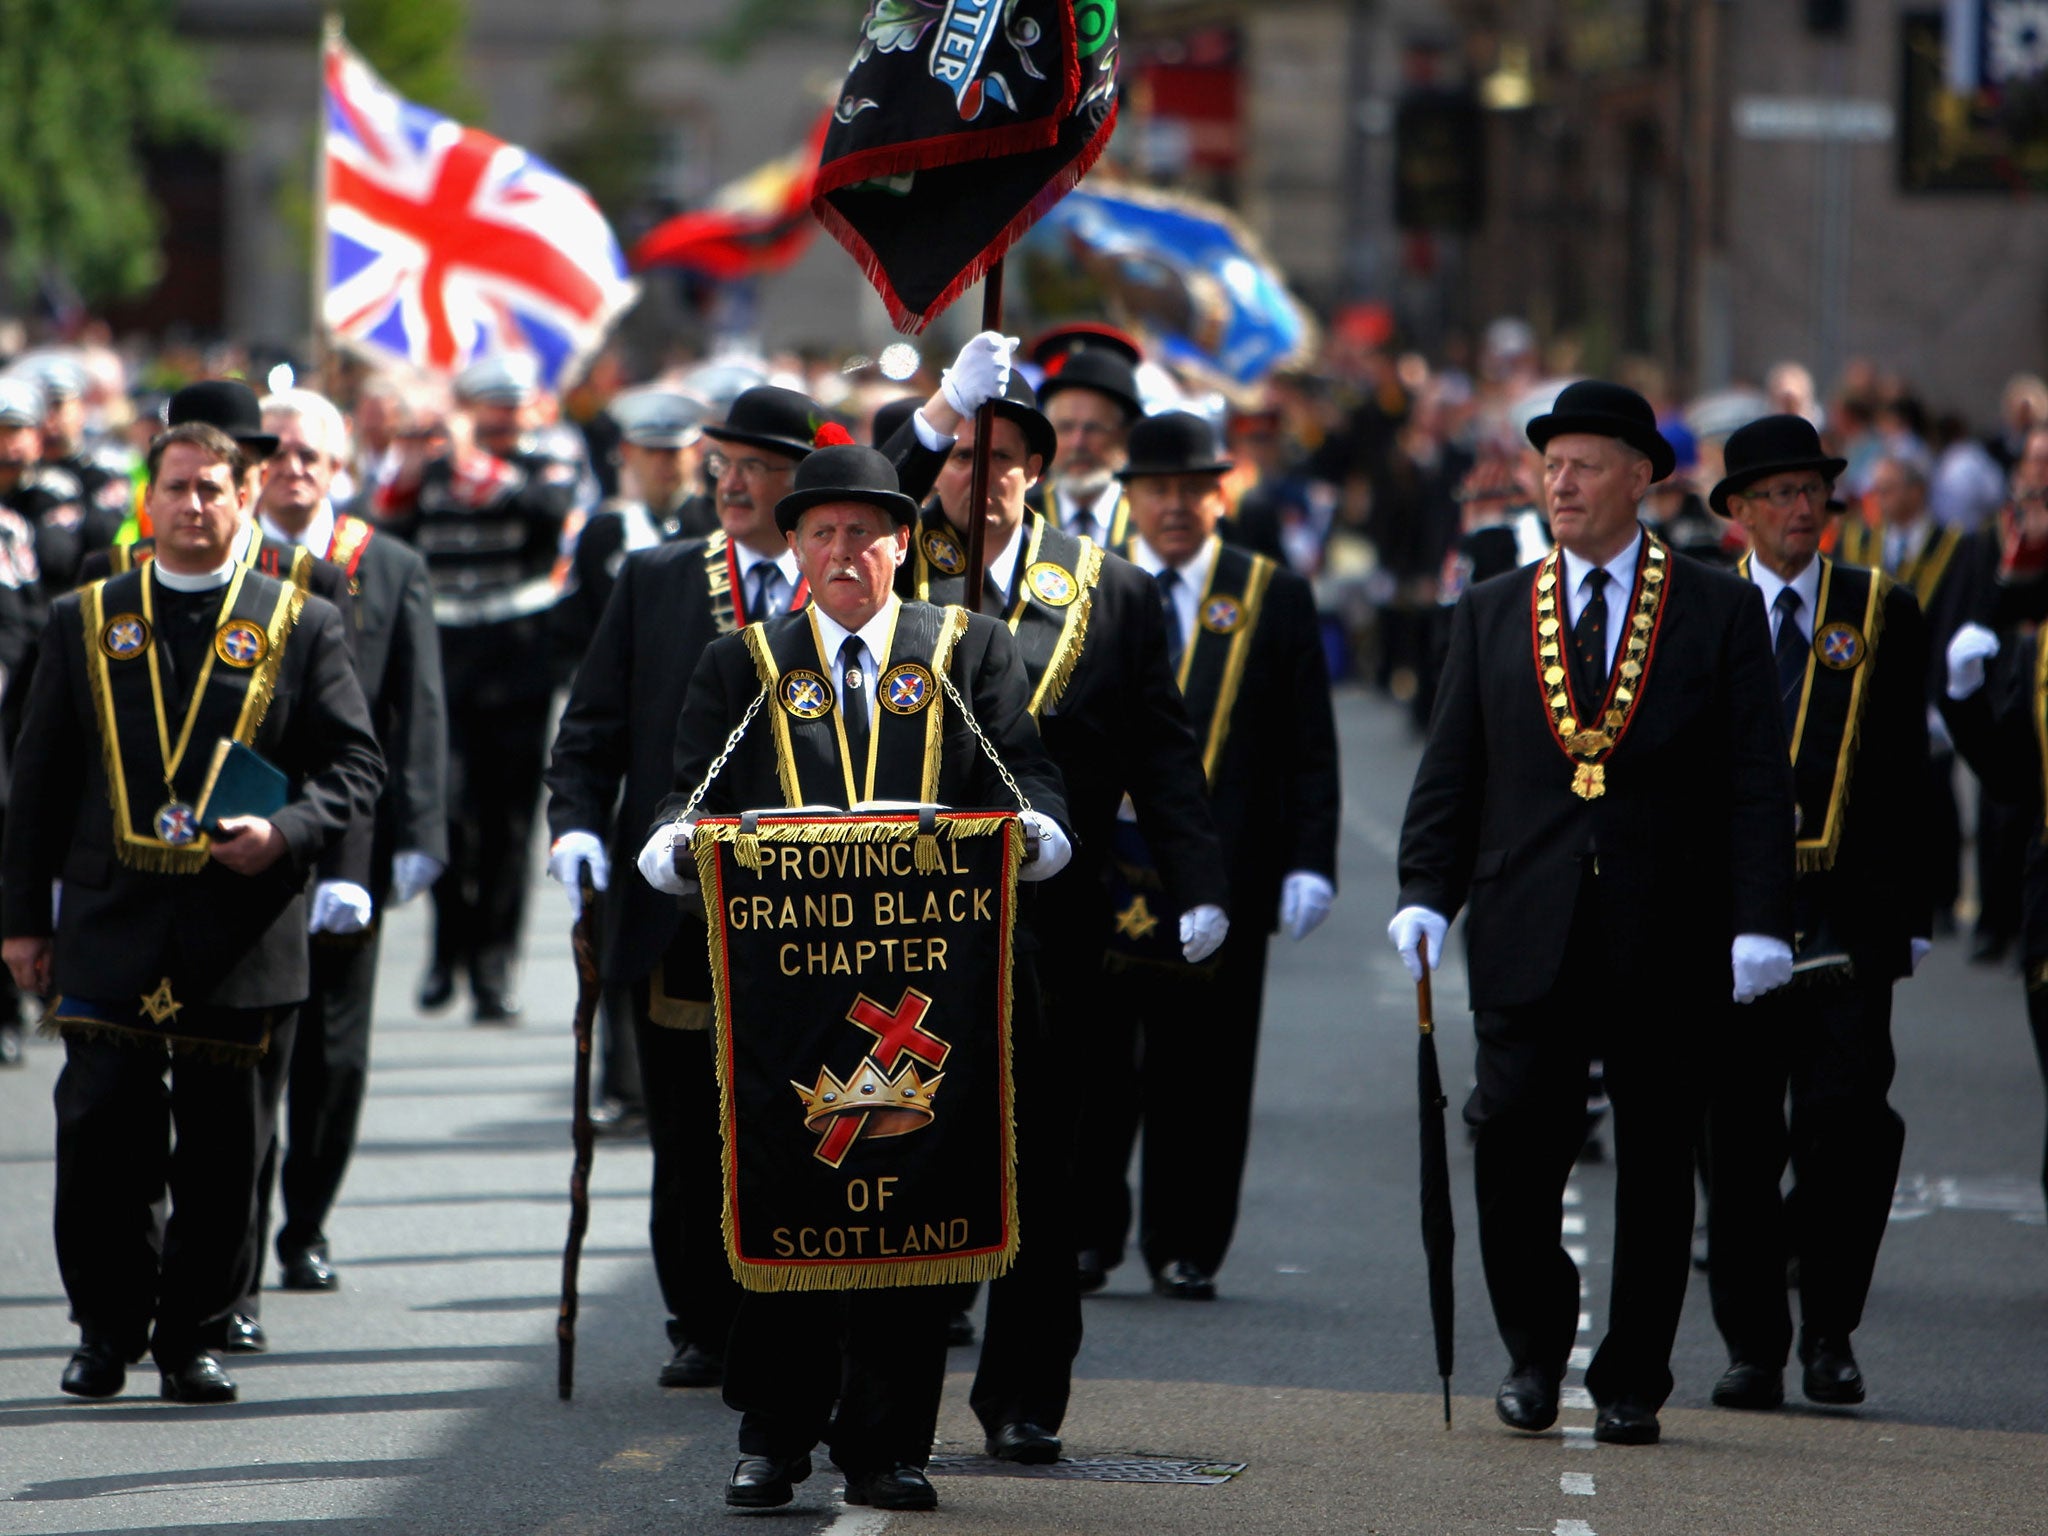 Grand Black Chapter of Scotland’s Orange Order hopes 15,000 members will march in Edinburgh